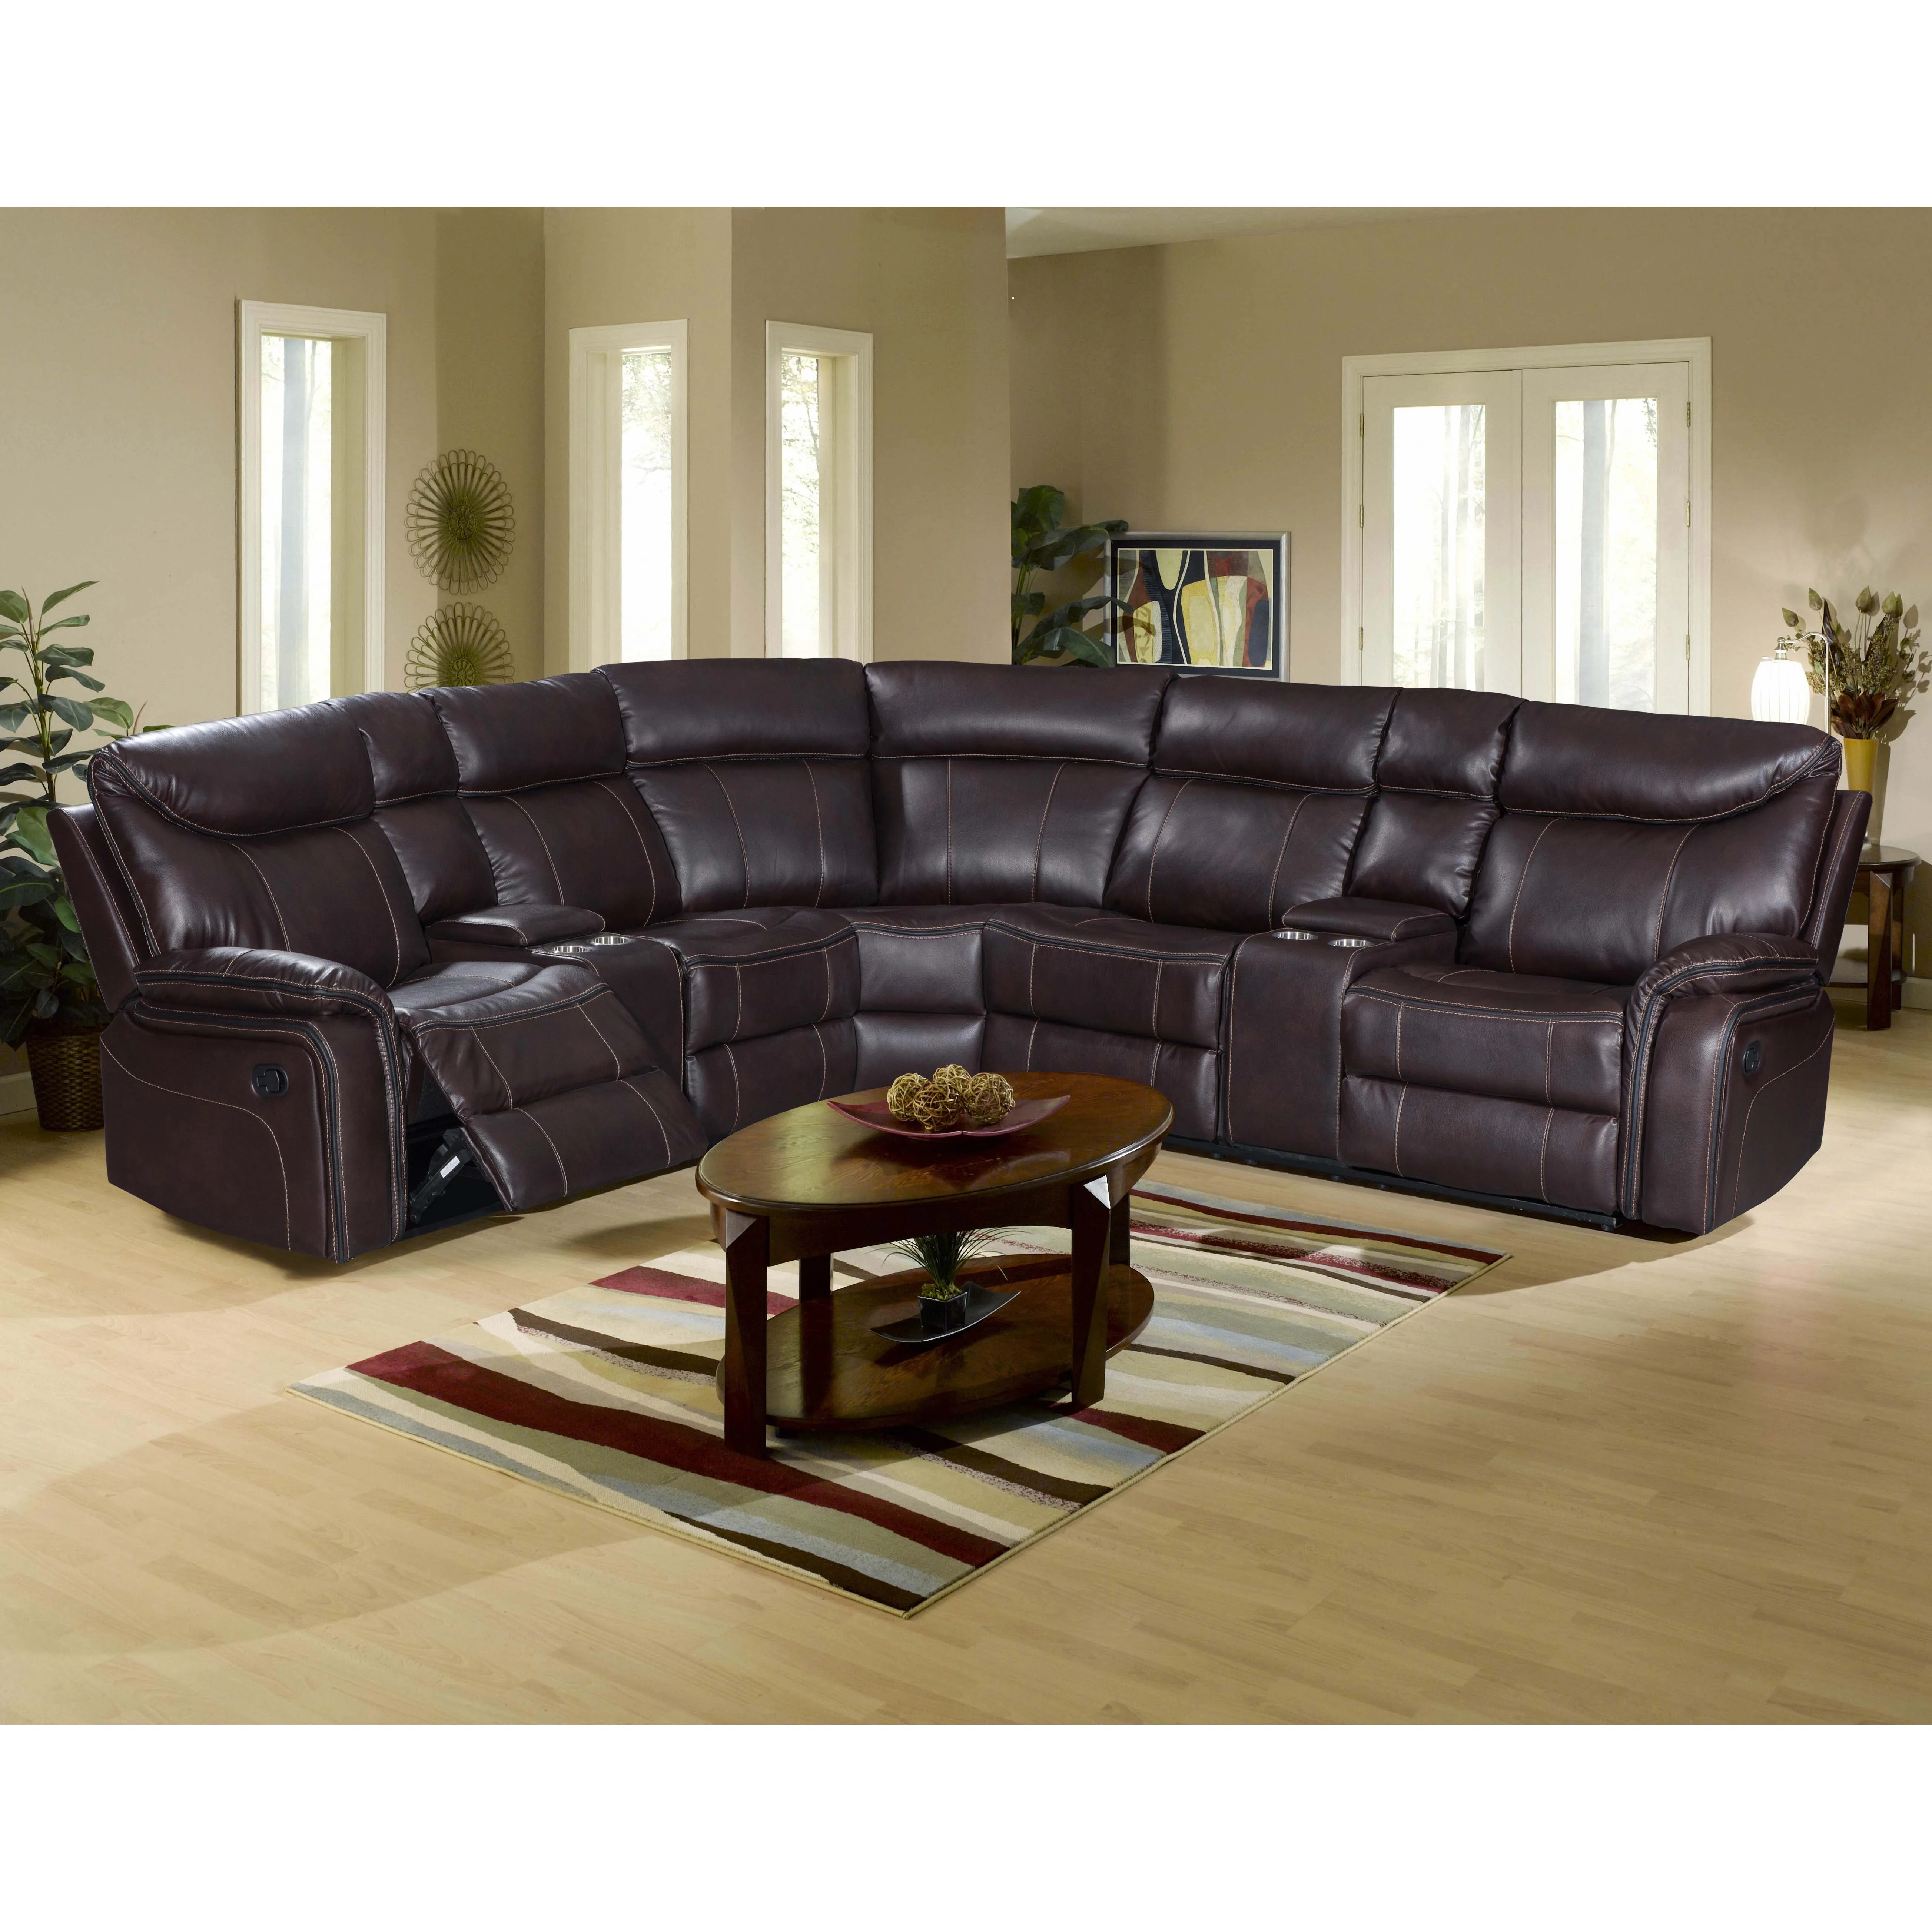 
New design leather round corner hotel living room sectional recliner sofa restaurant sofa seat bar sofa furniture 